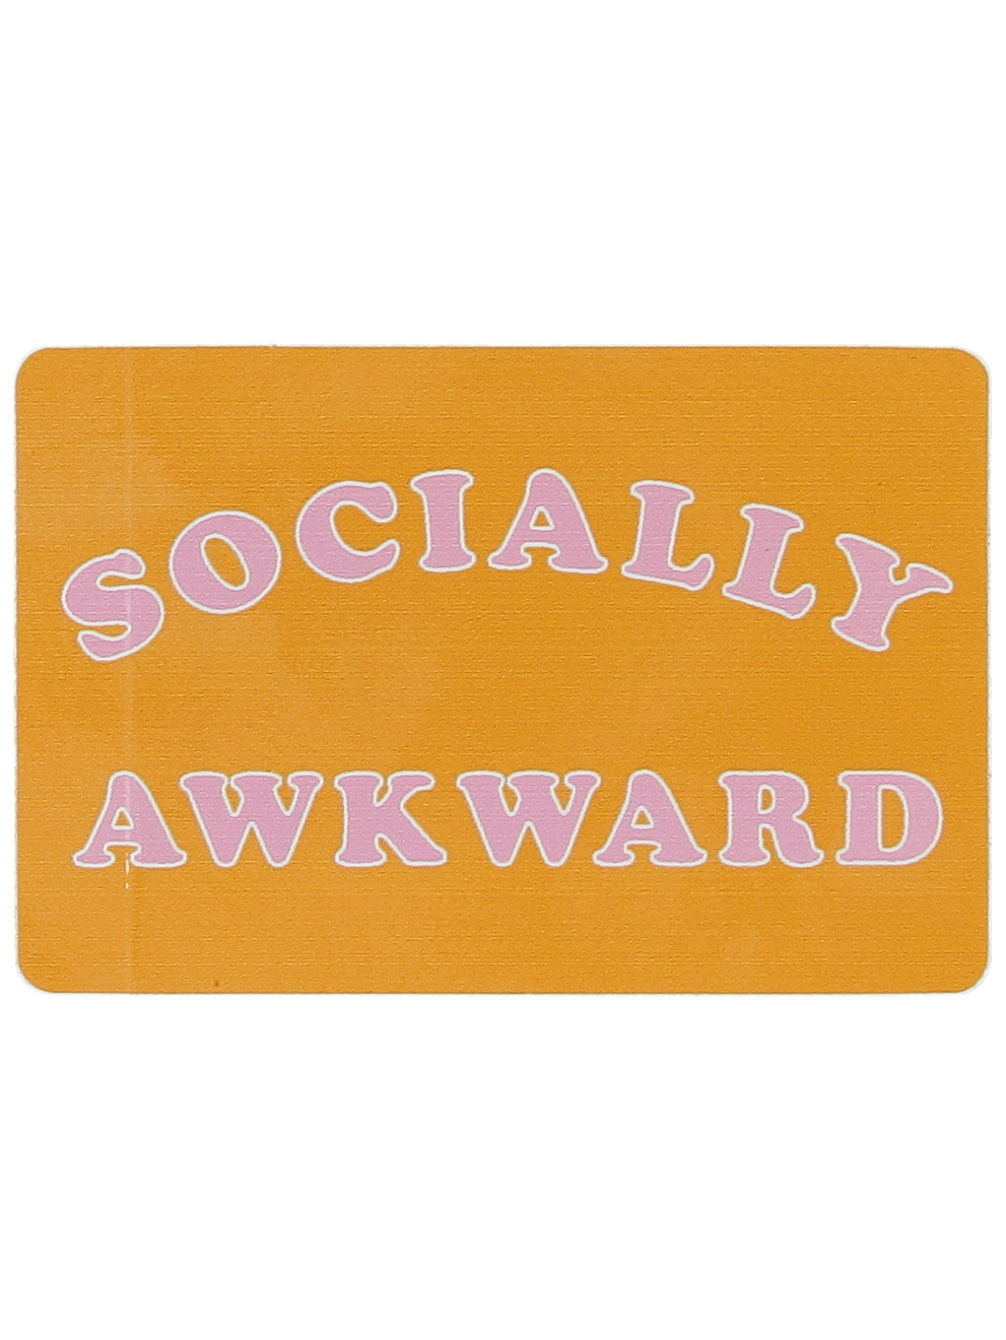 Socially Awkward Adesivo